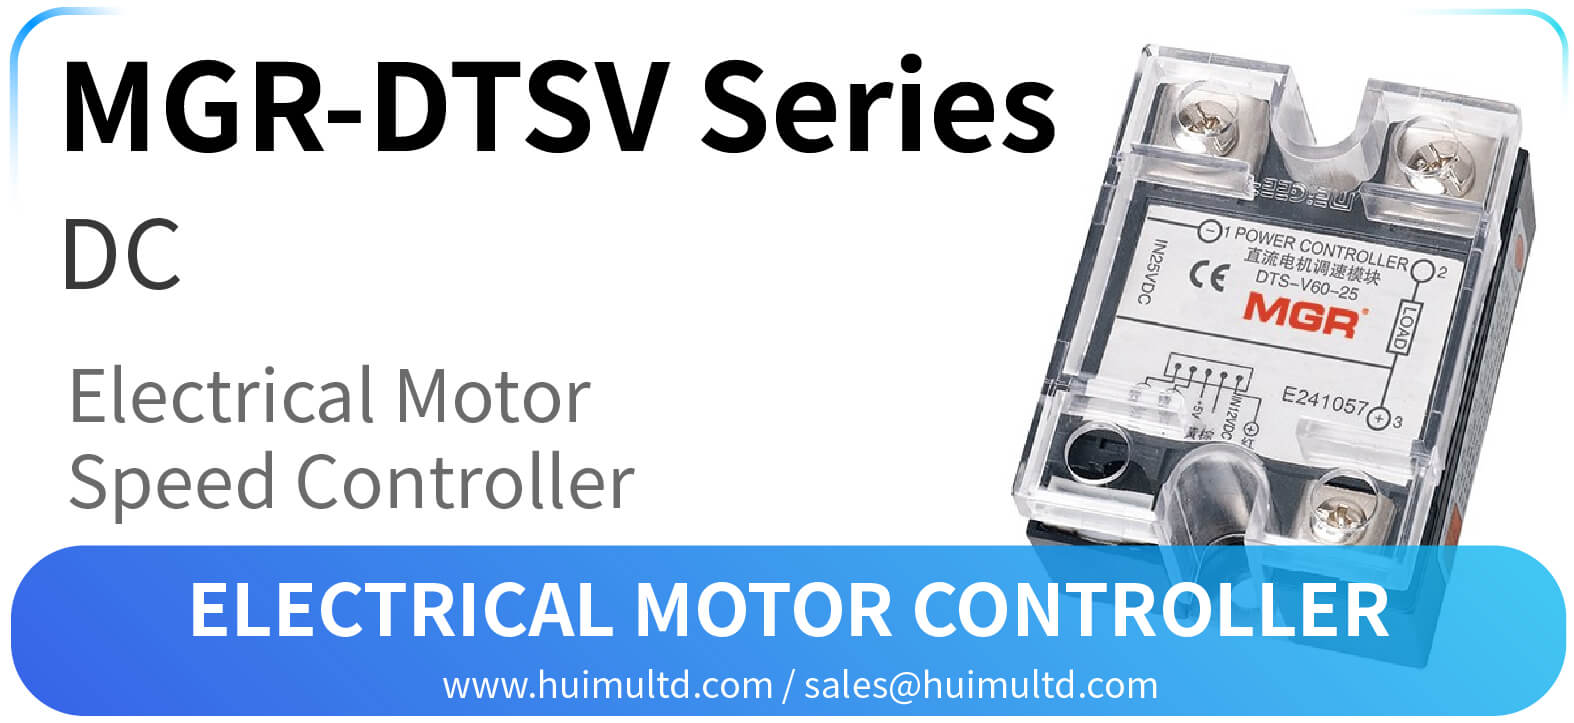 MGR-DTSV Series Electrical Motor Controller